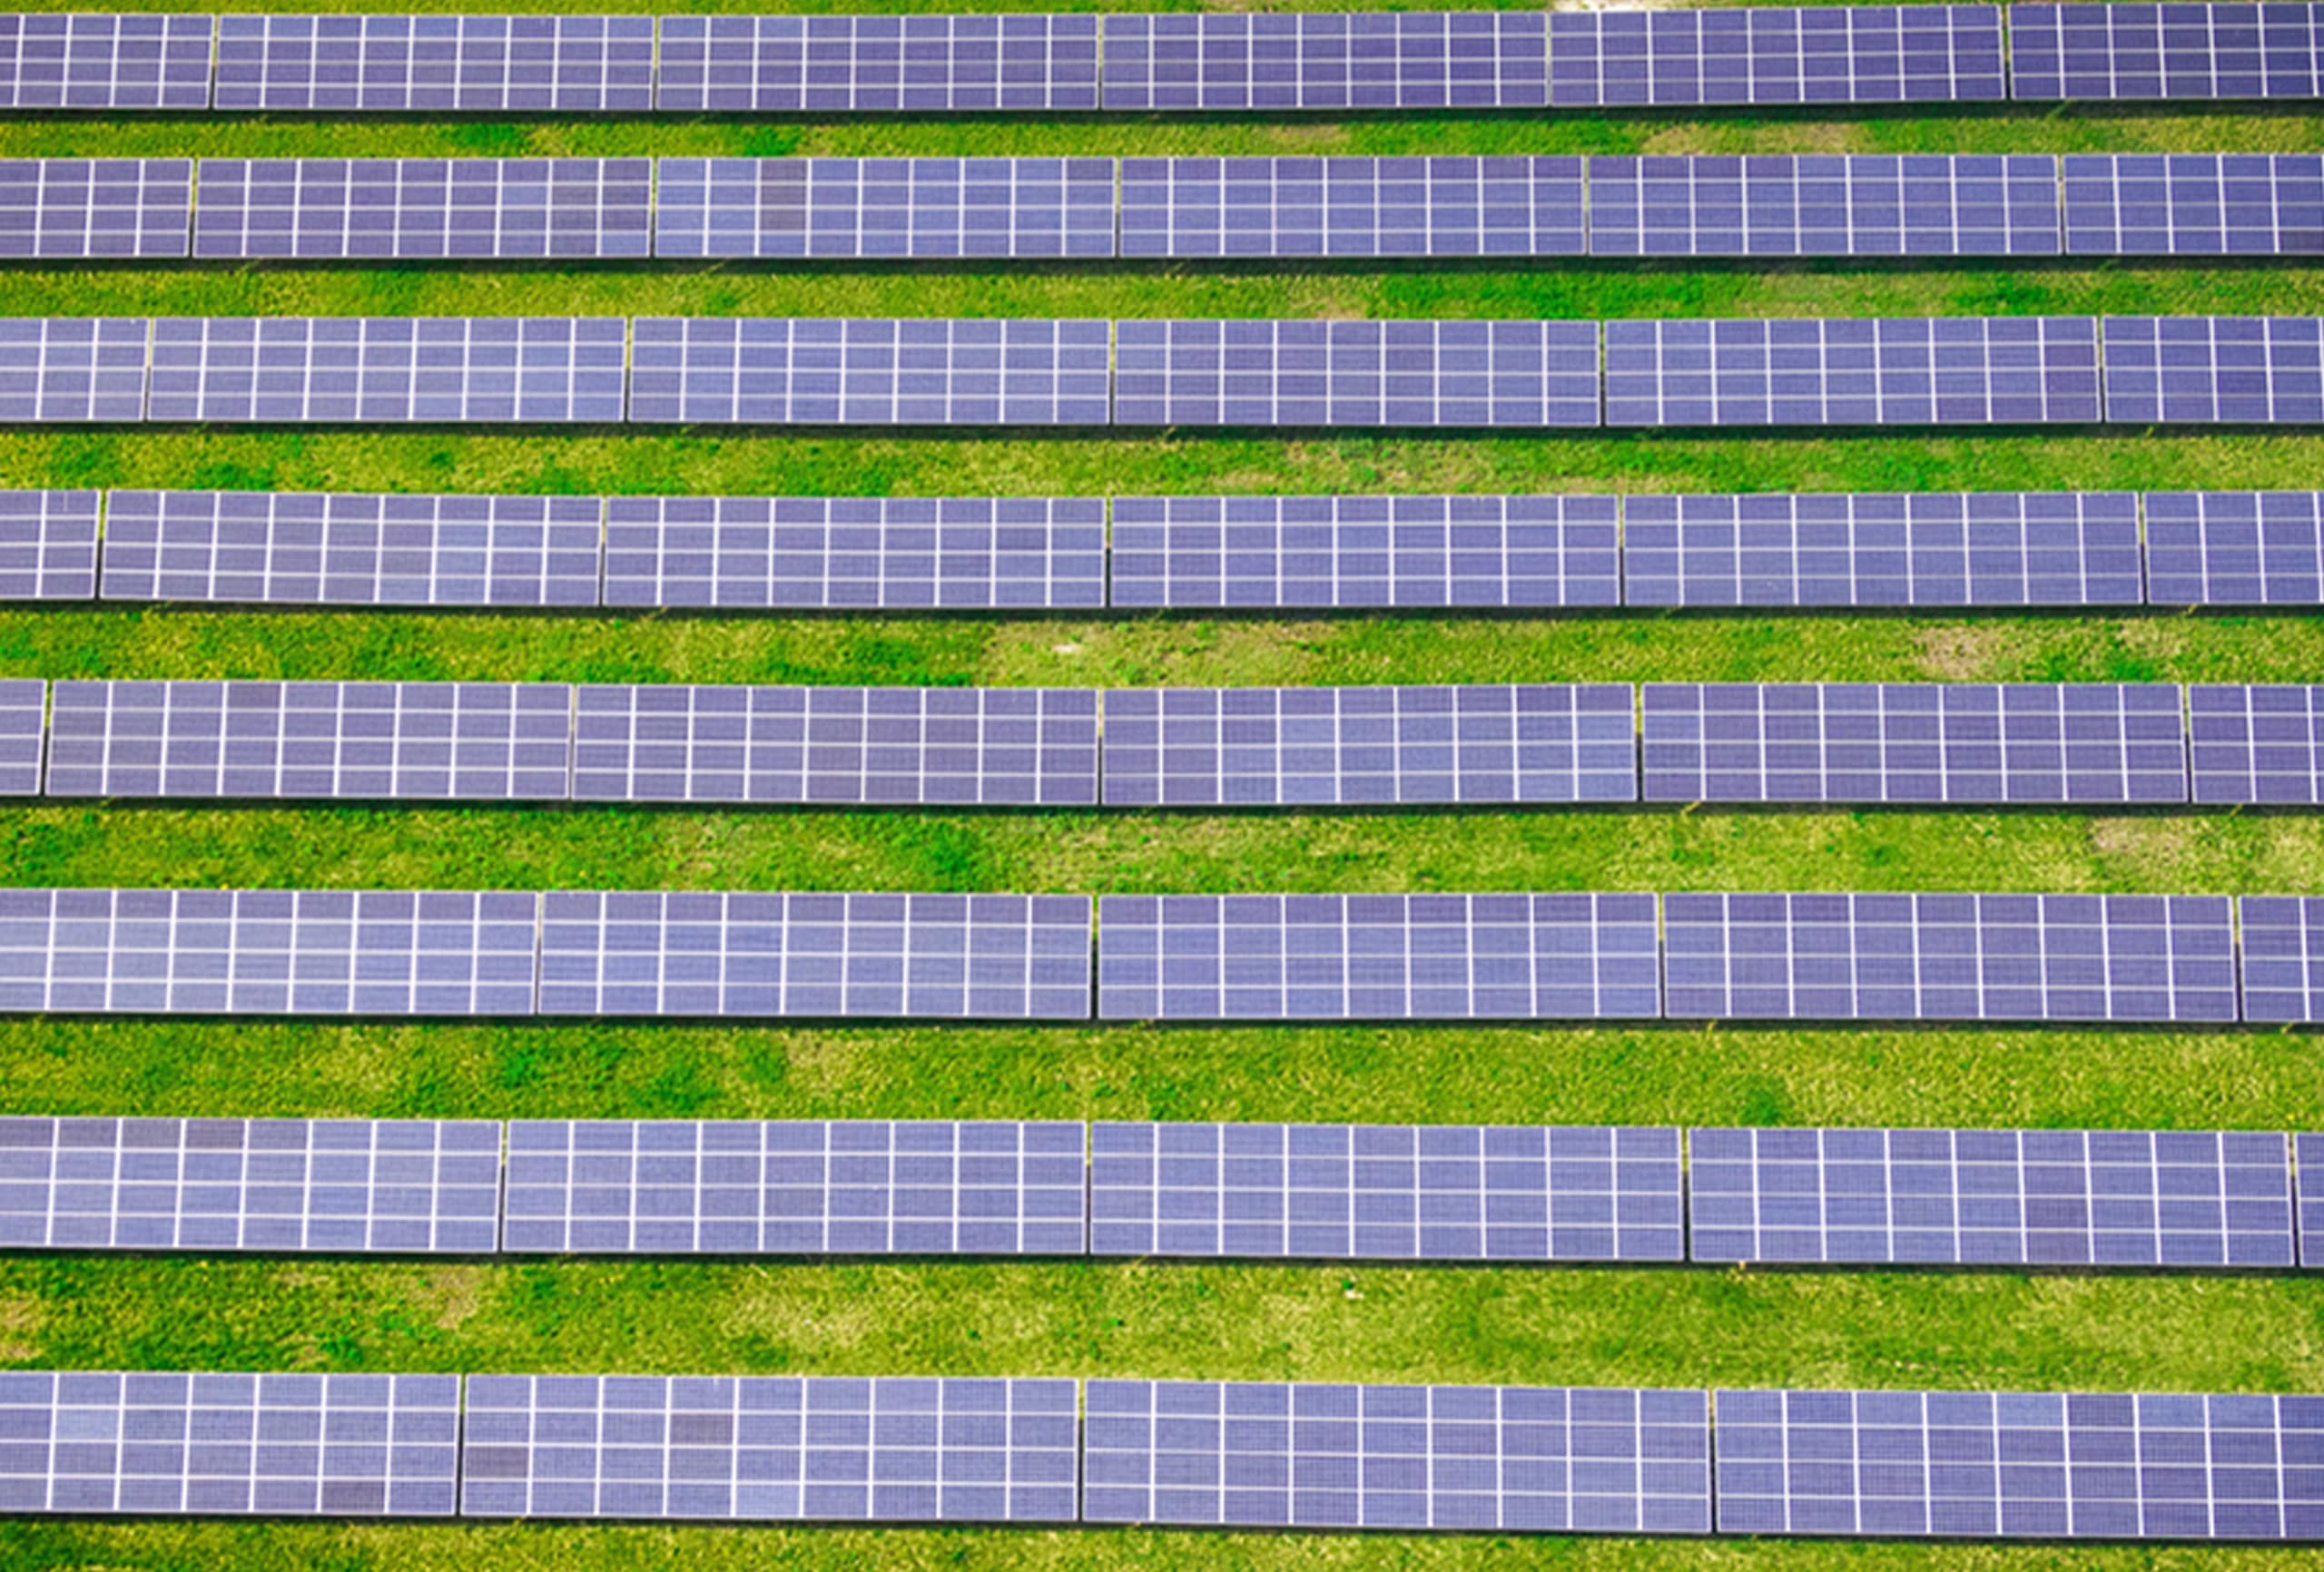 Solar panels on the grass